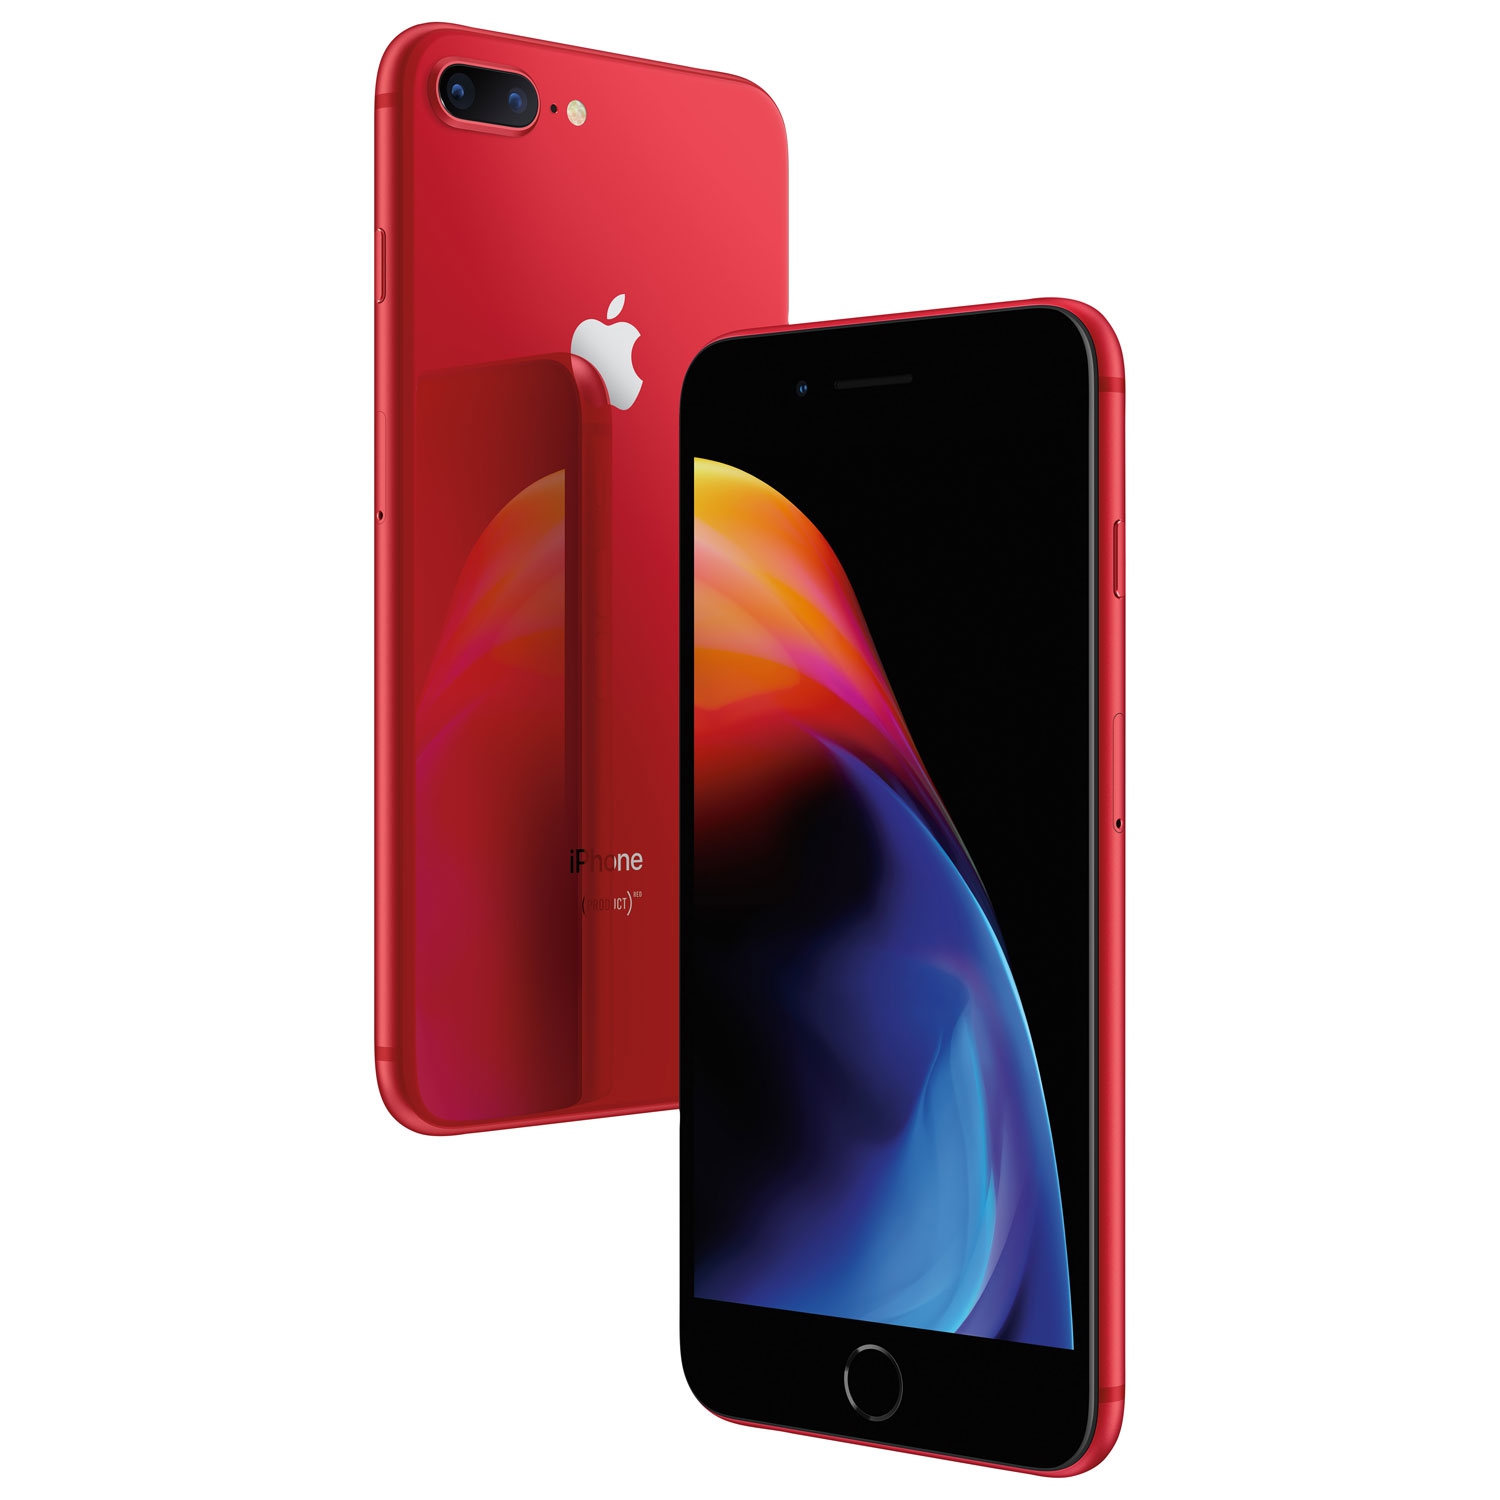 Refurbished (Good) - Apple iPhone 8 256GB Smartphone - (Product)RED - Unlocked